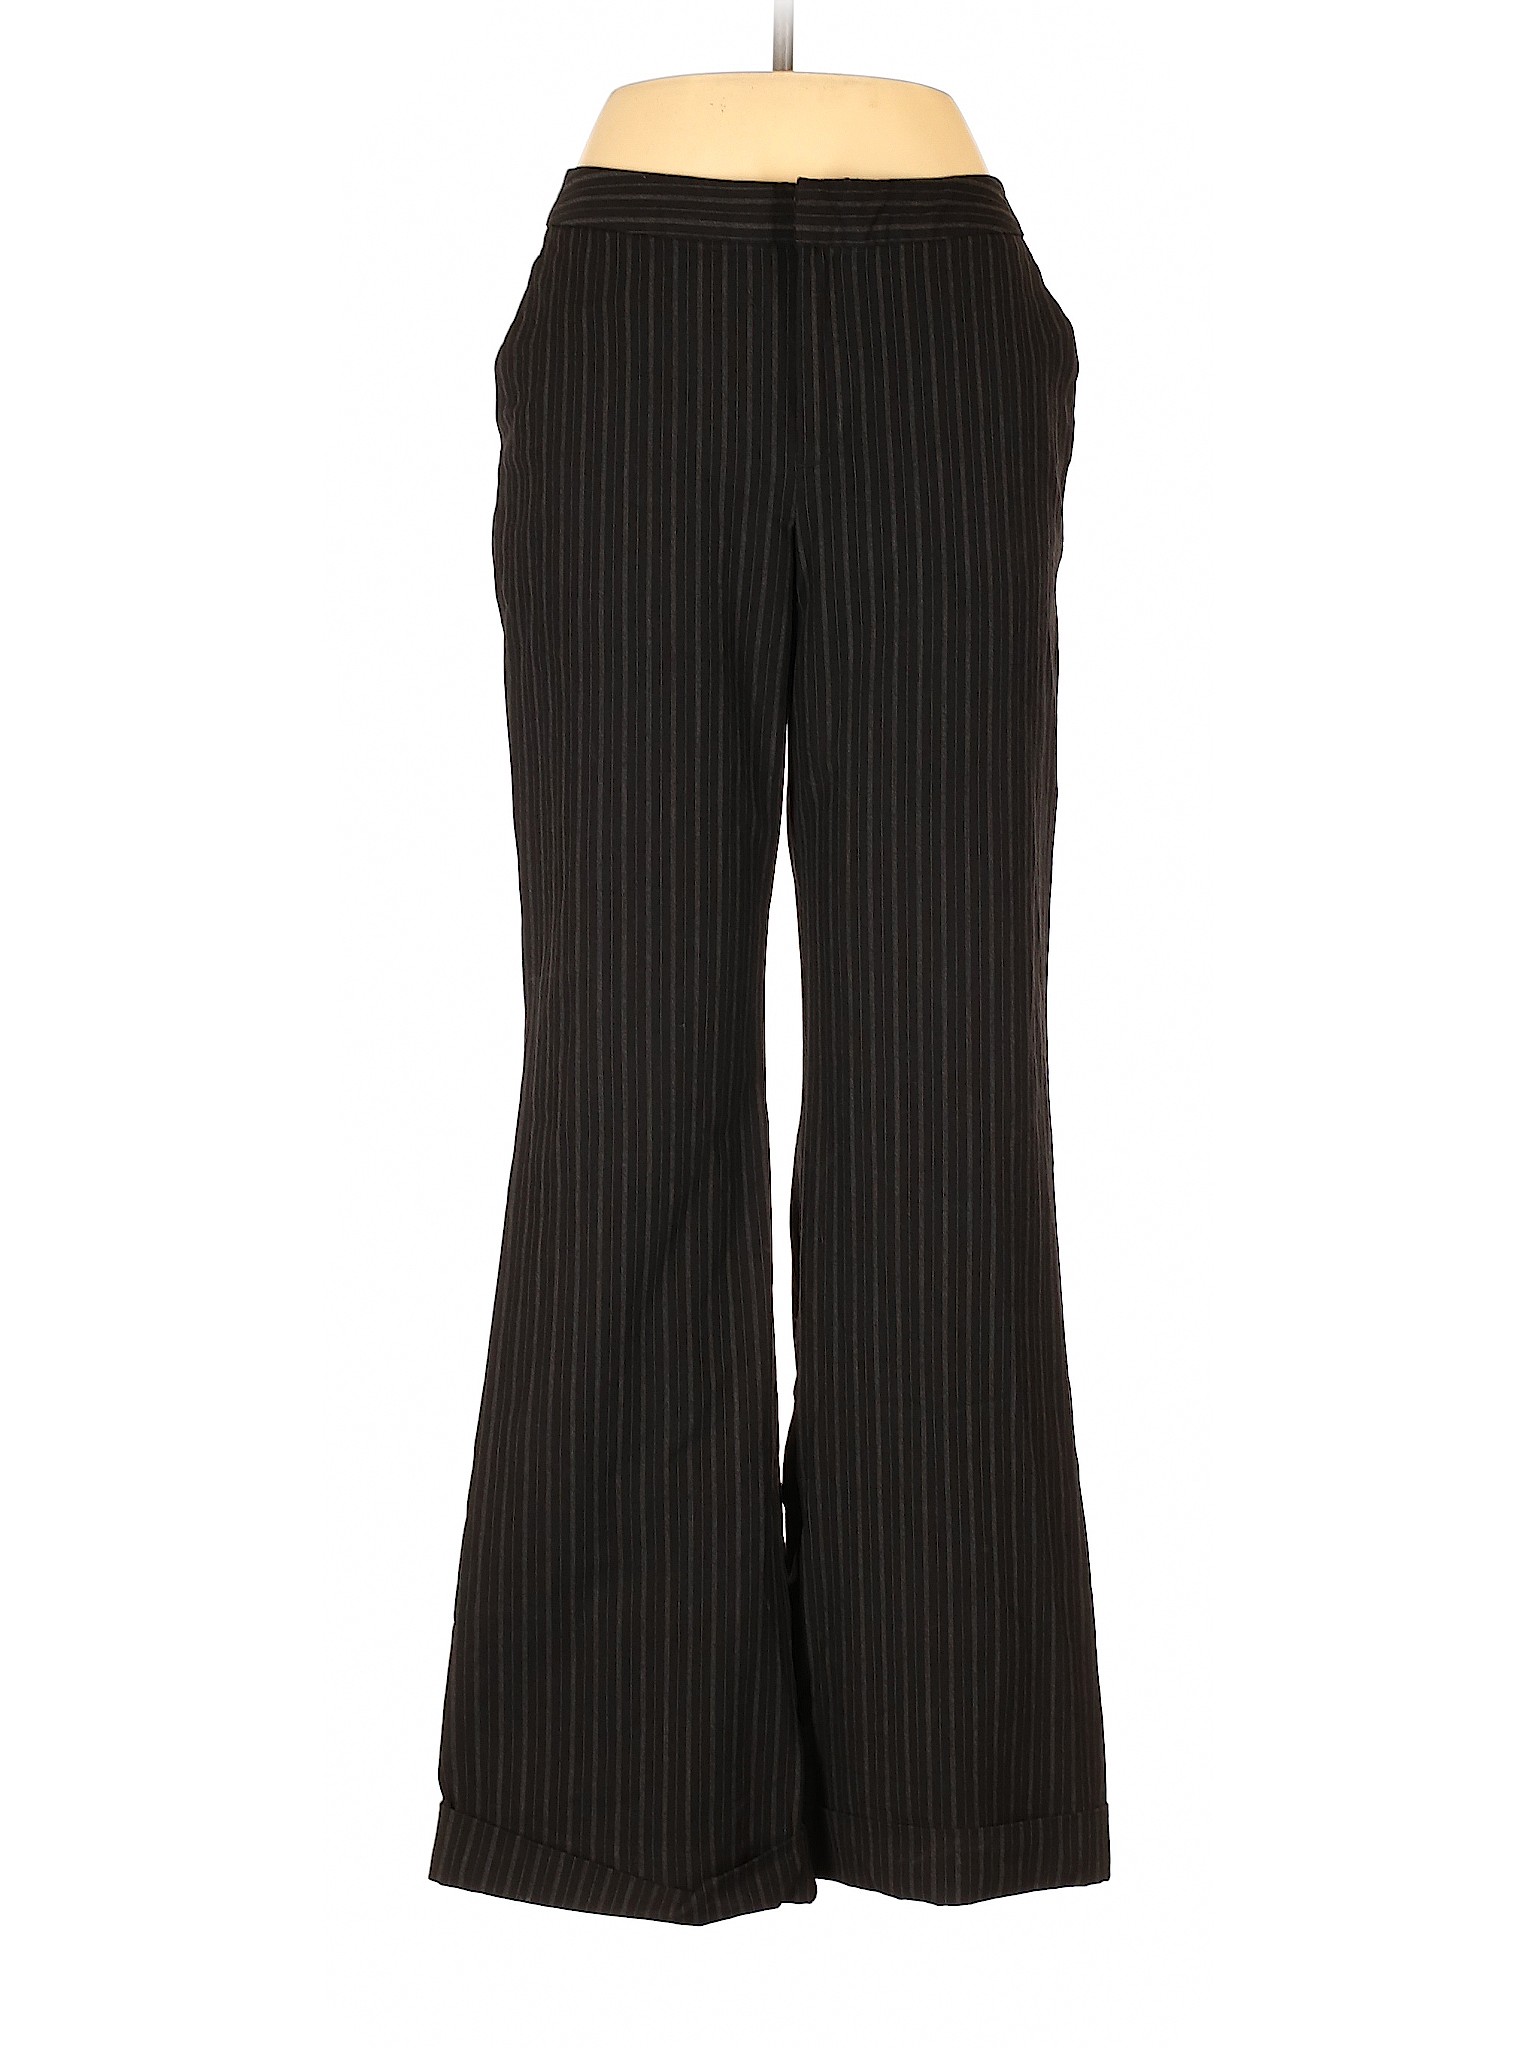 Old Navy Women Black Dress Pants 8 | eBay